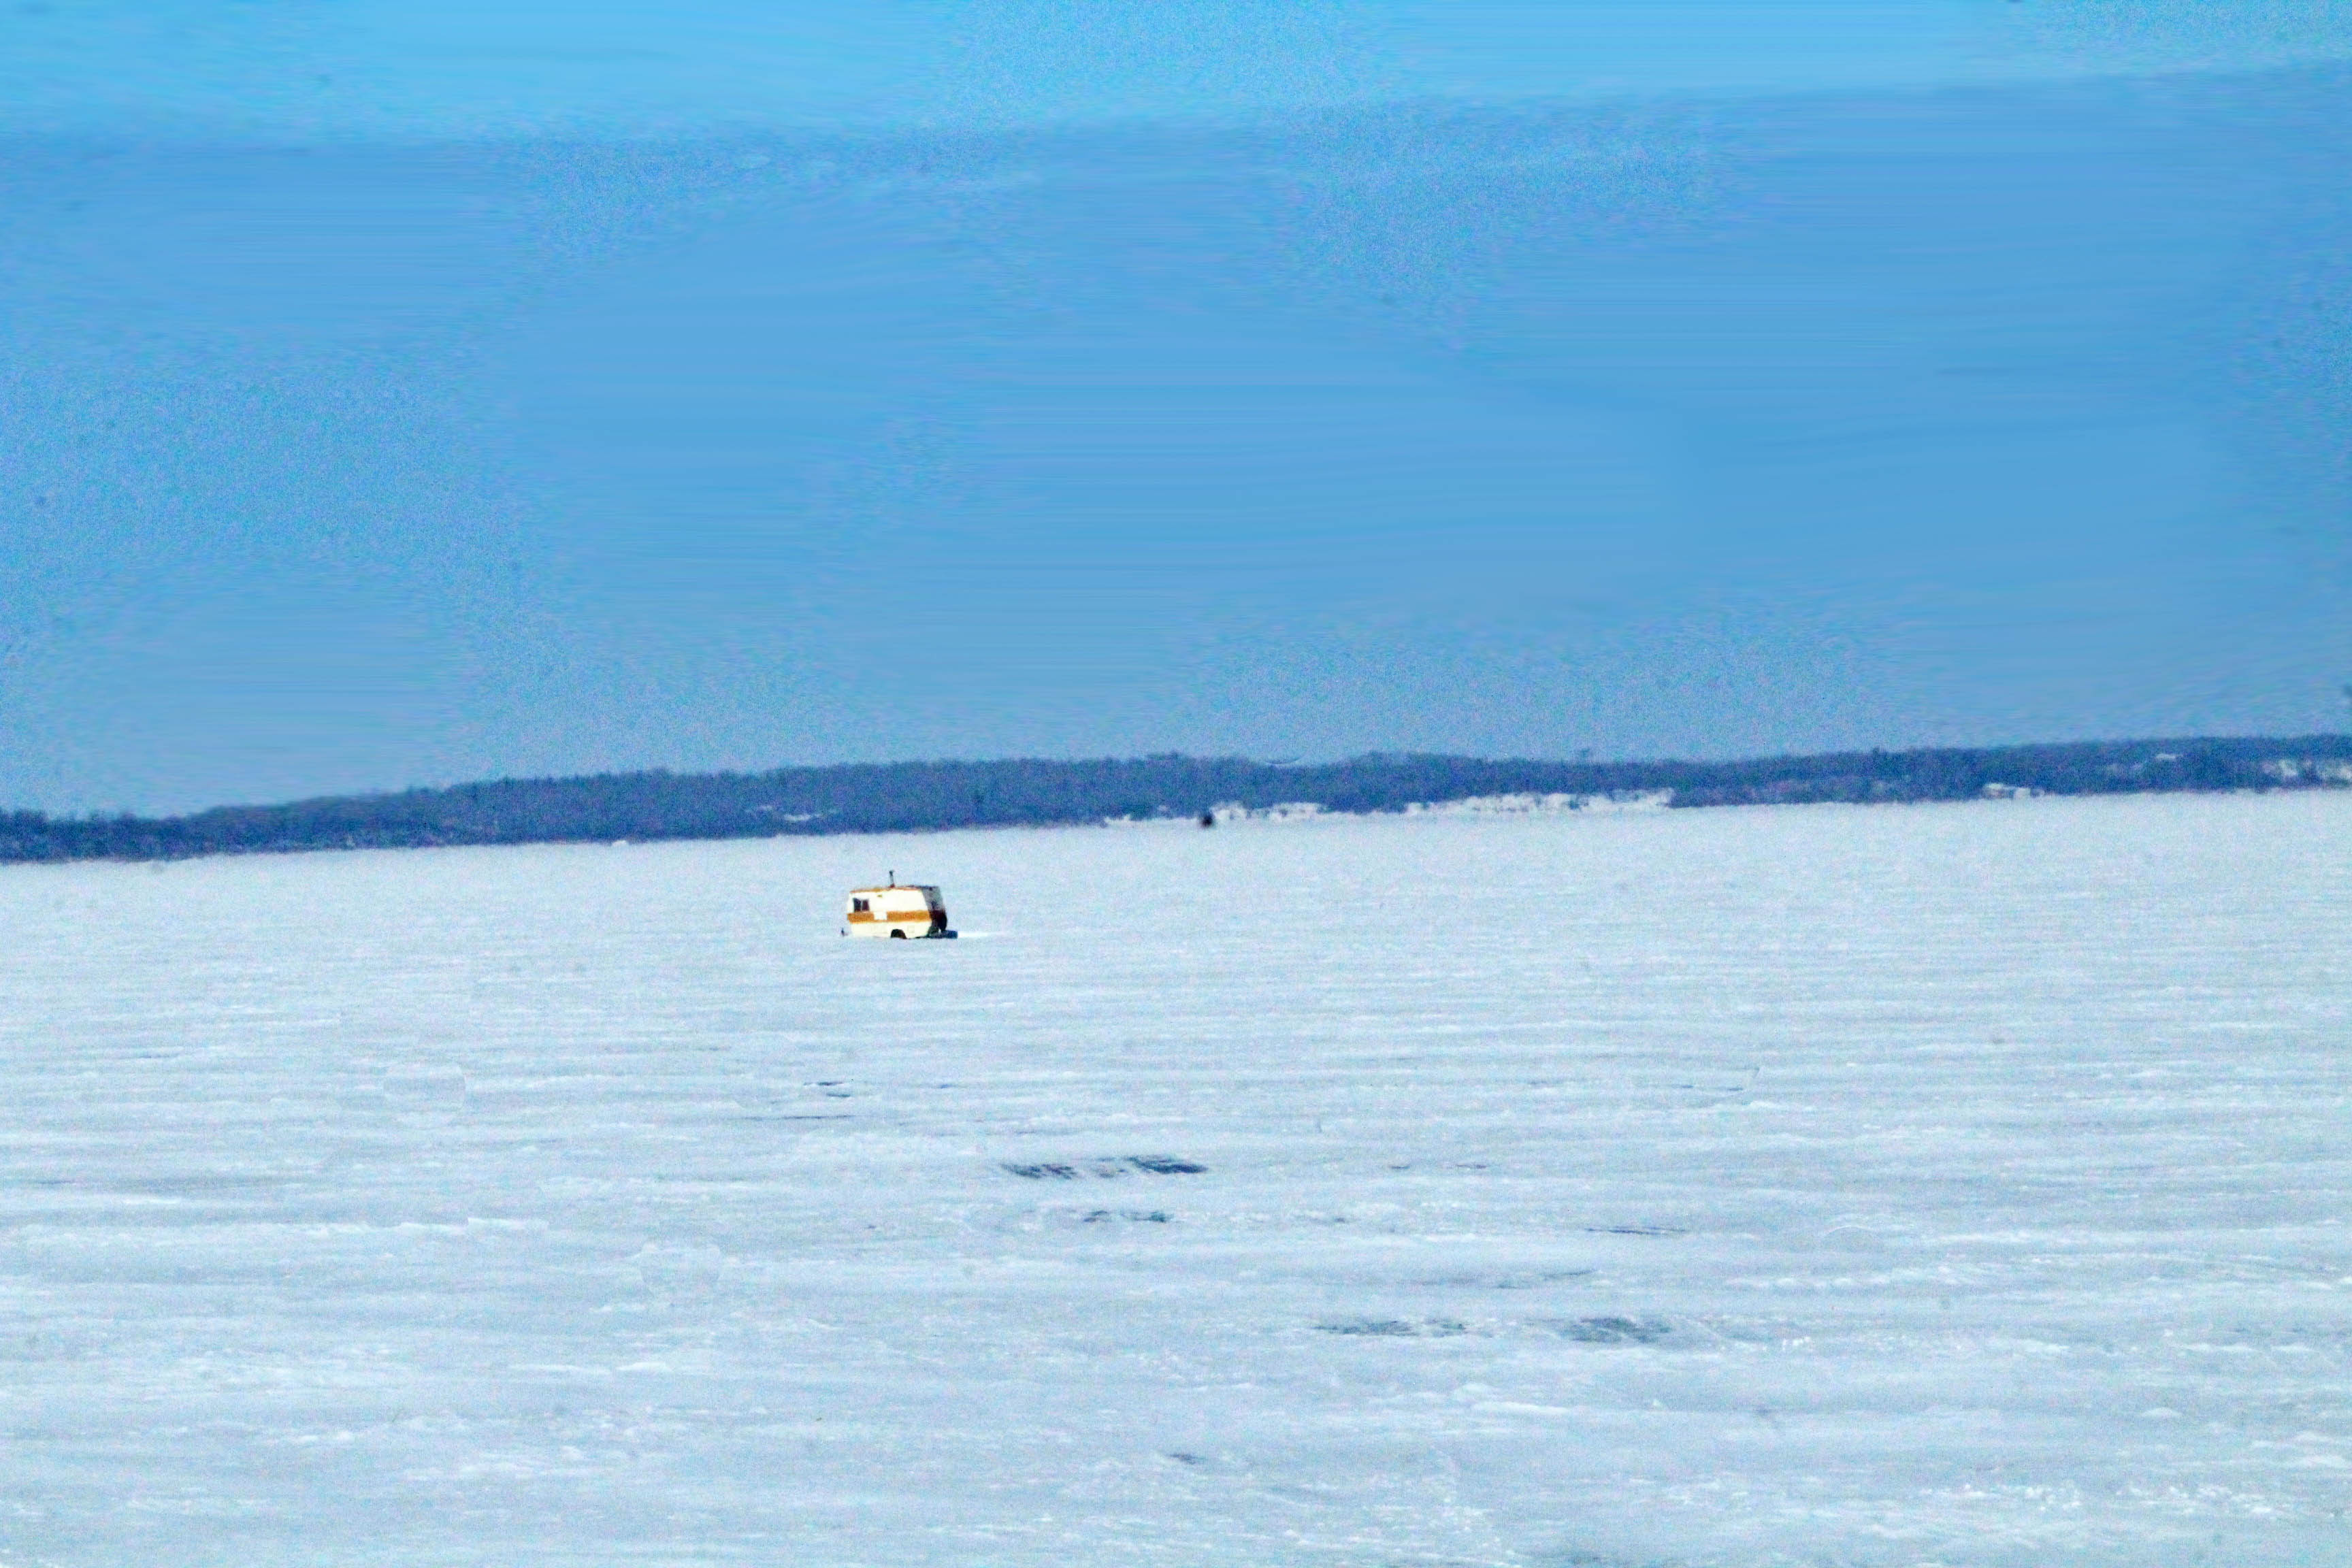 Ice Fishing in the Lakeland Region 